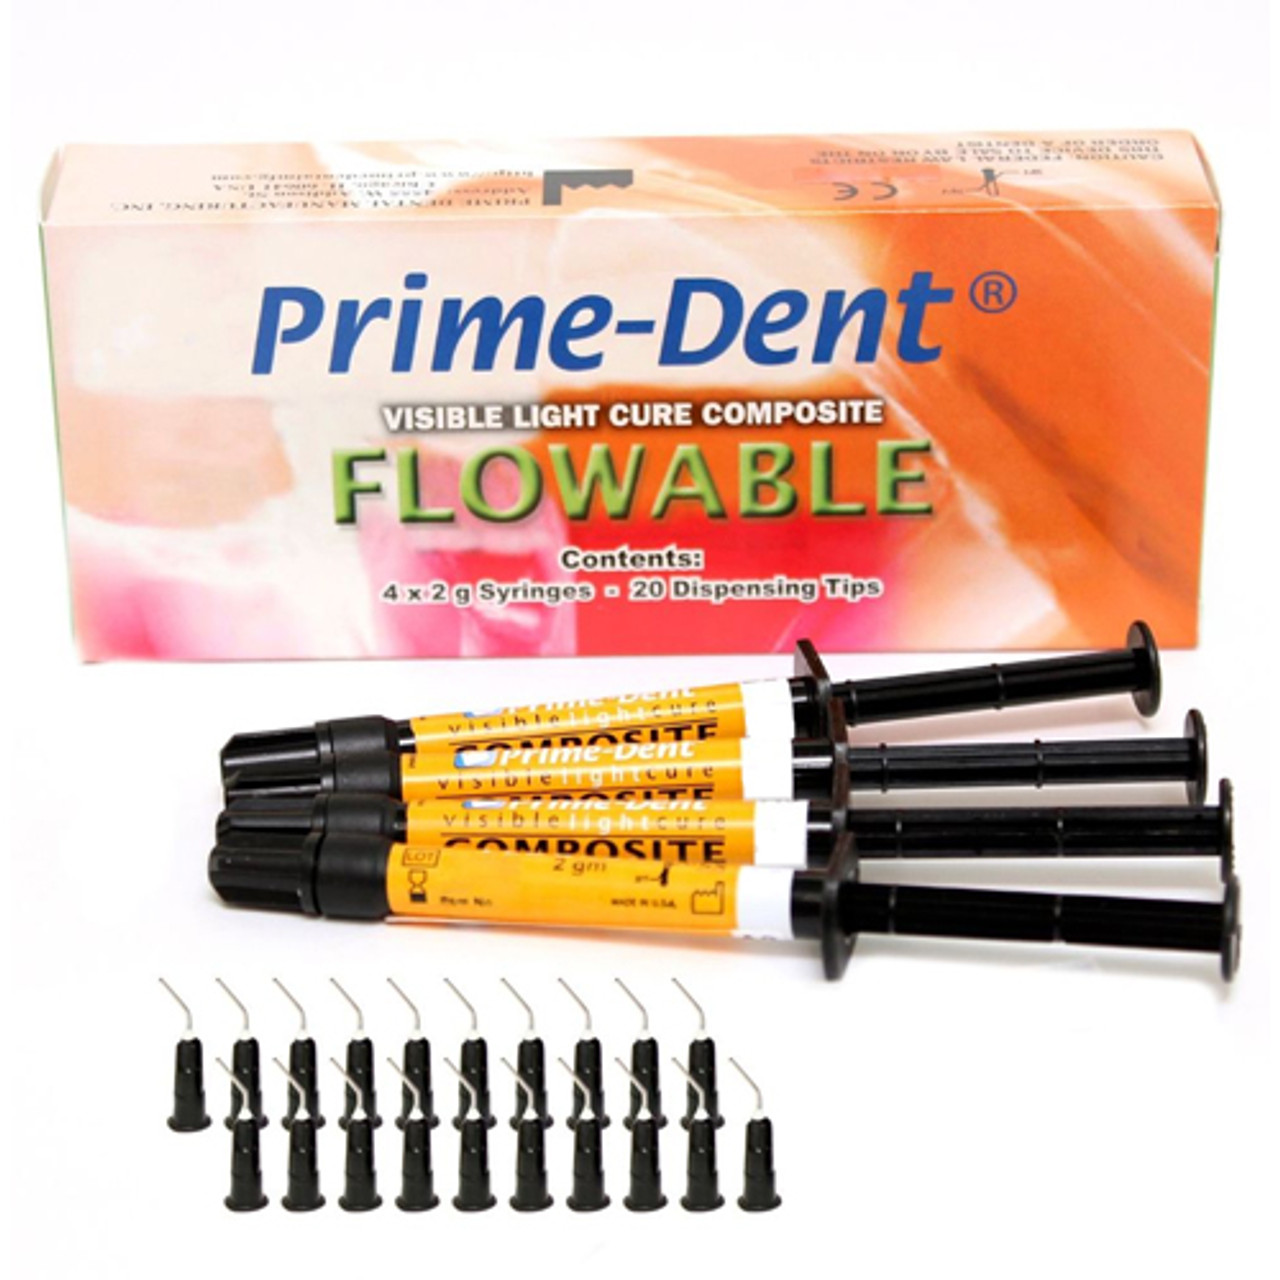 Prime-Dent Flowable Composite C4 - 4 Syringe Kit. VLC (Visible Light Cure)